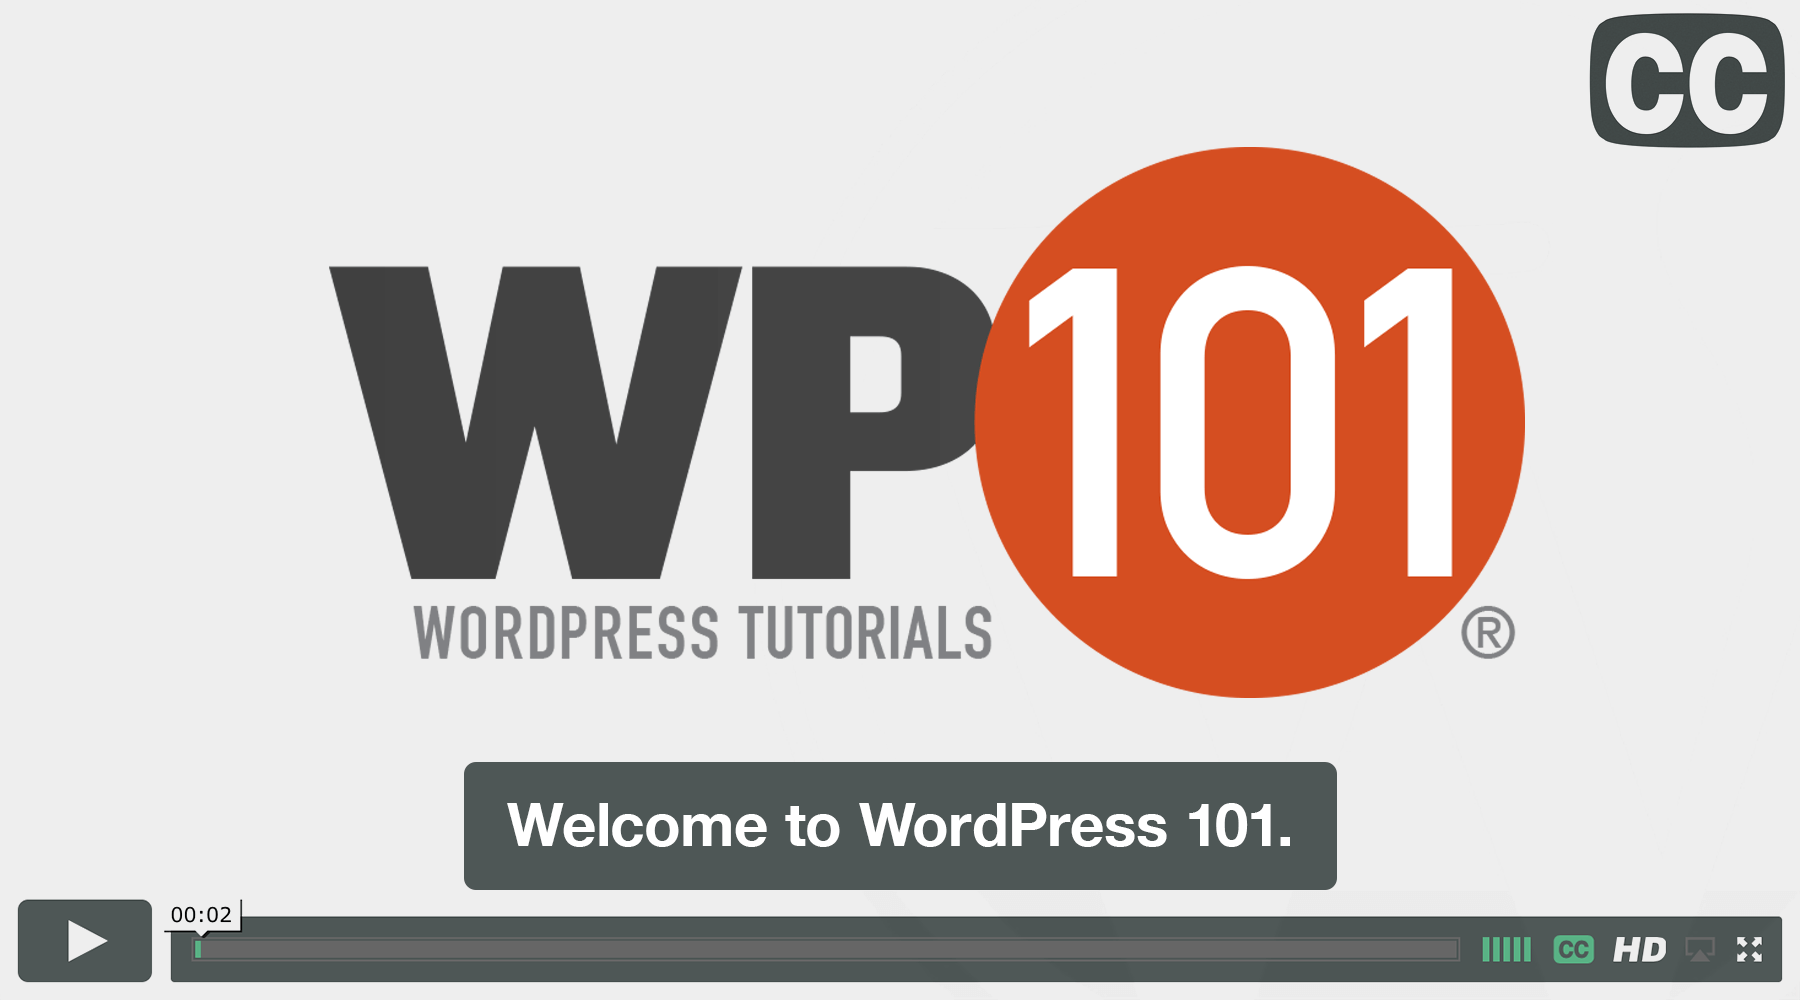 Closed Captioned WordPress Video Tutorials from WP101.com